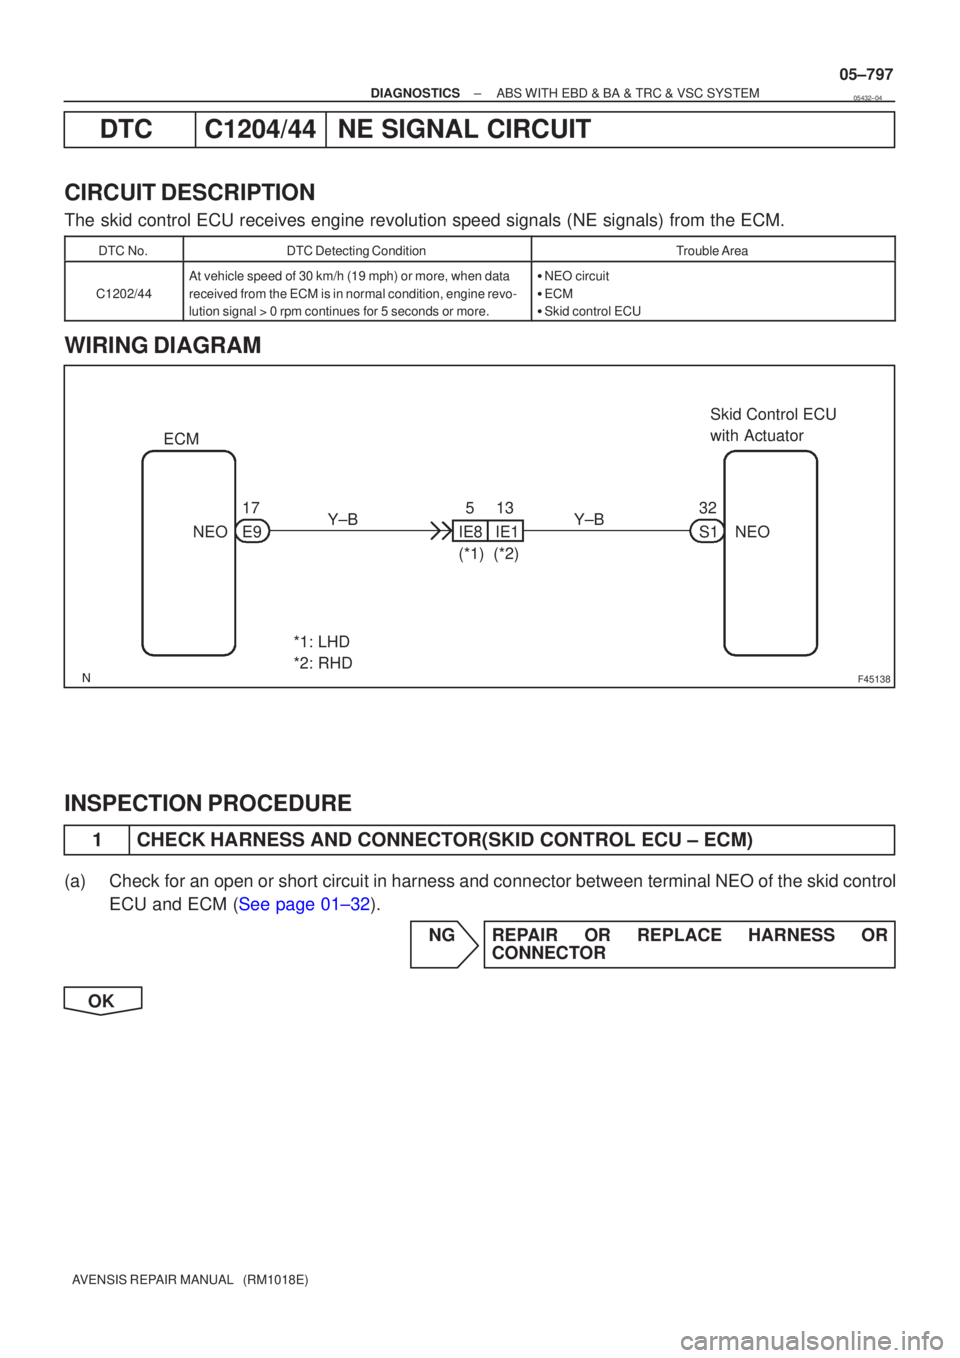 TOYOTA AVENSIS 2005  Service Repair Manual F45138
Skid Control ECU 
with ActuatorNEO
S1 32
Y±B
*1: LHD
*2: RHD Y±B
NEOE9 17
IE85
IE113
(*1)(*2)
ECM
±
DIAGNOSTICS ABS WITH EBD & BA & TRC & VSC SYSTEM
05±797
AVENSIS REPAIR MANUAL   (RM1018E)